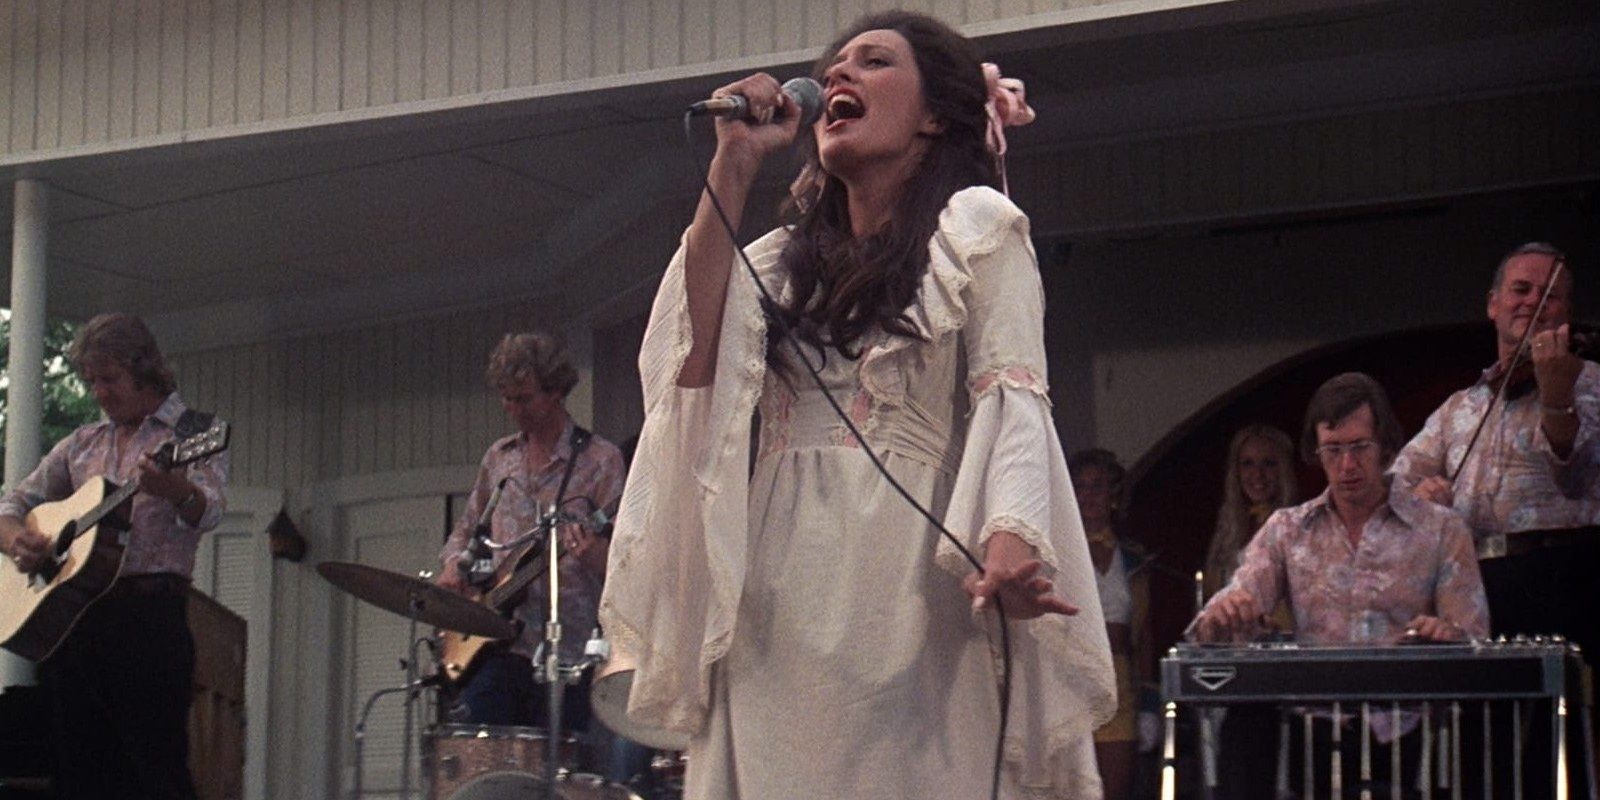 Barbara Jean singing on stage in Robert Altman's Nashville